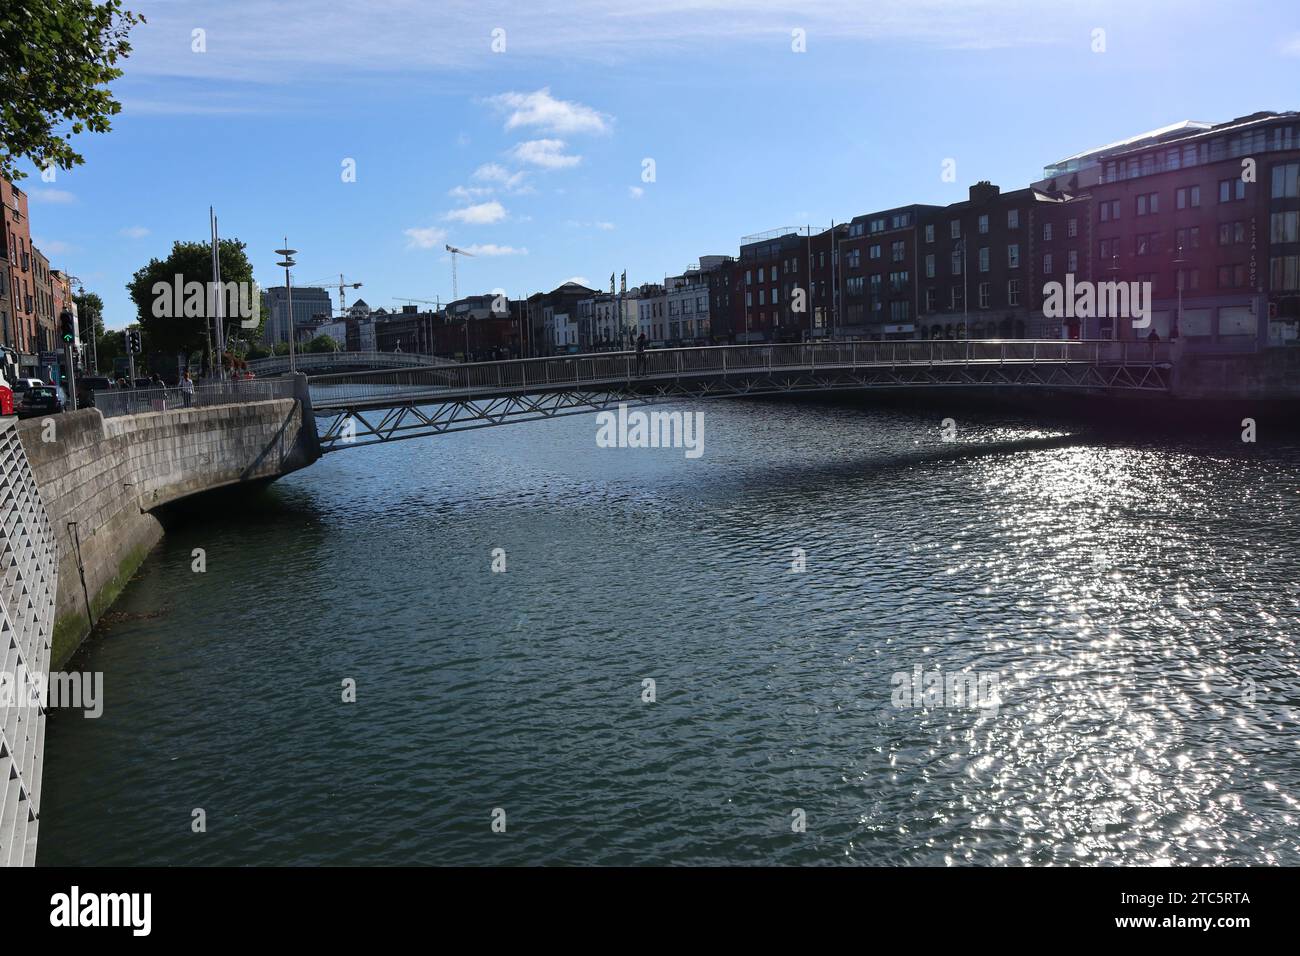 Dublino - Ponte del Millennio sul Fiume Liffey Banque D'Images